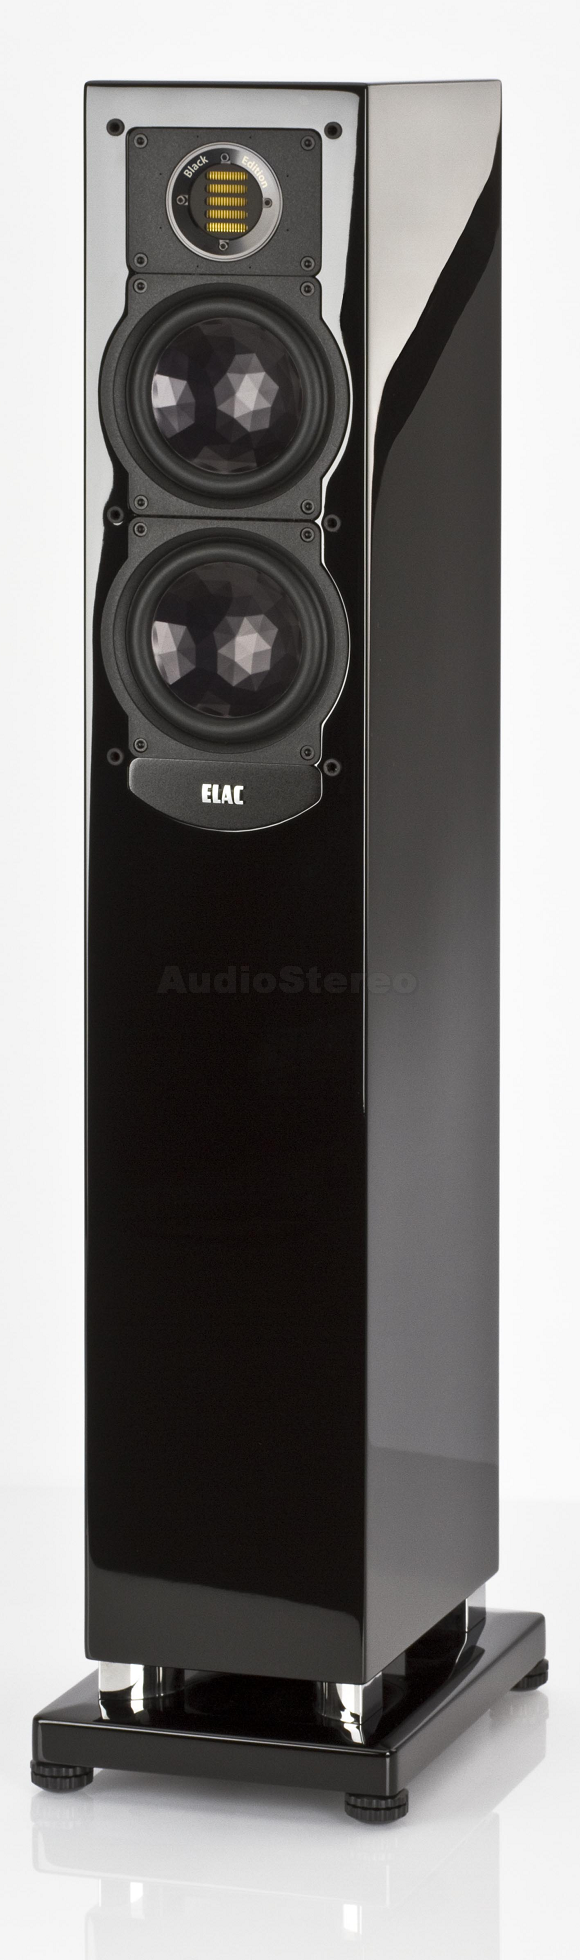 ELAC FS 247 Black Edition black high gloss finish